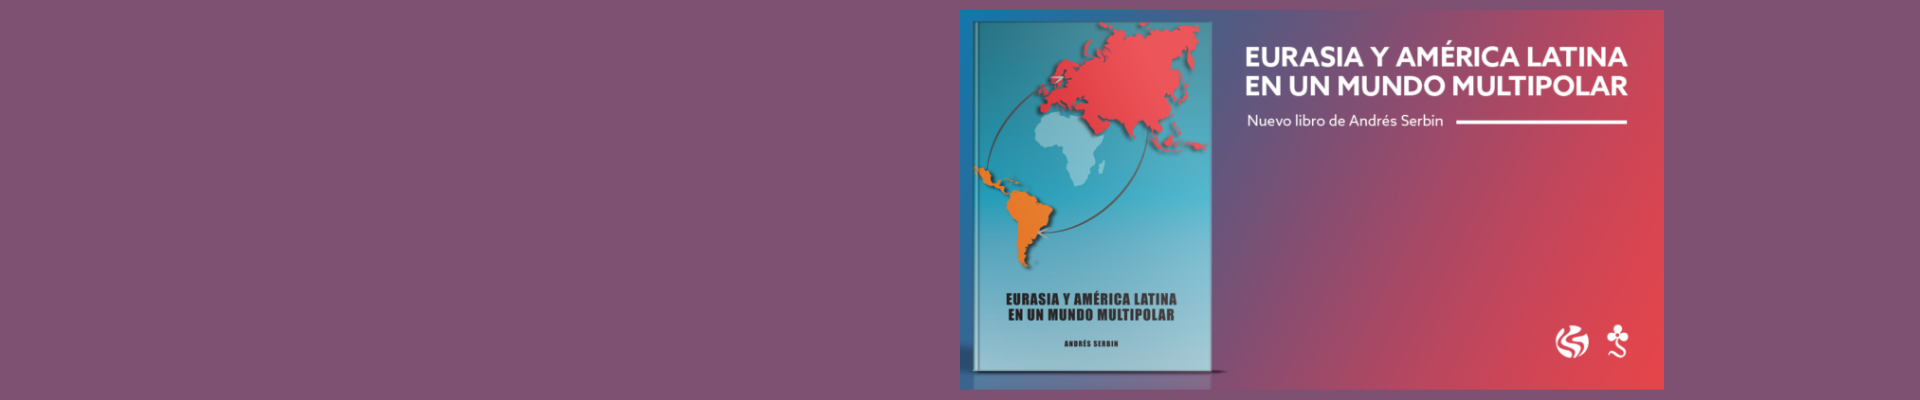 Nuevo libro de Andrés Serbin – Eurasia y América Latina en un Mundo Multipolar